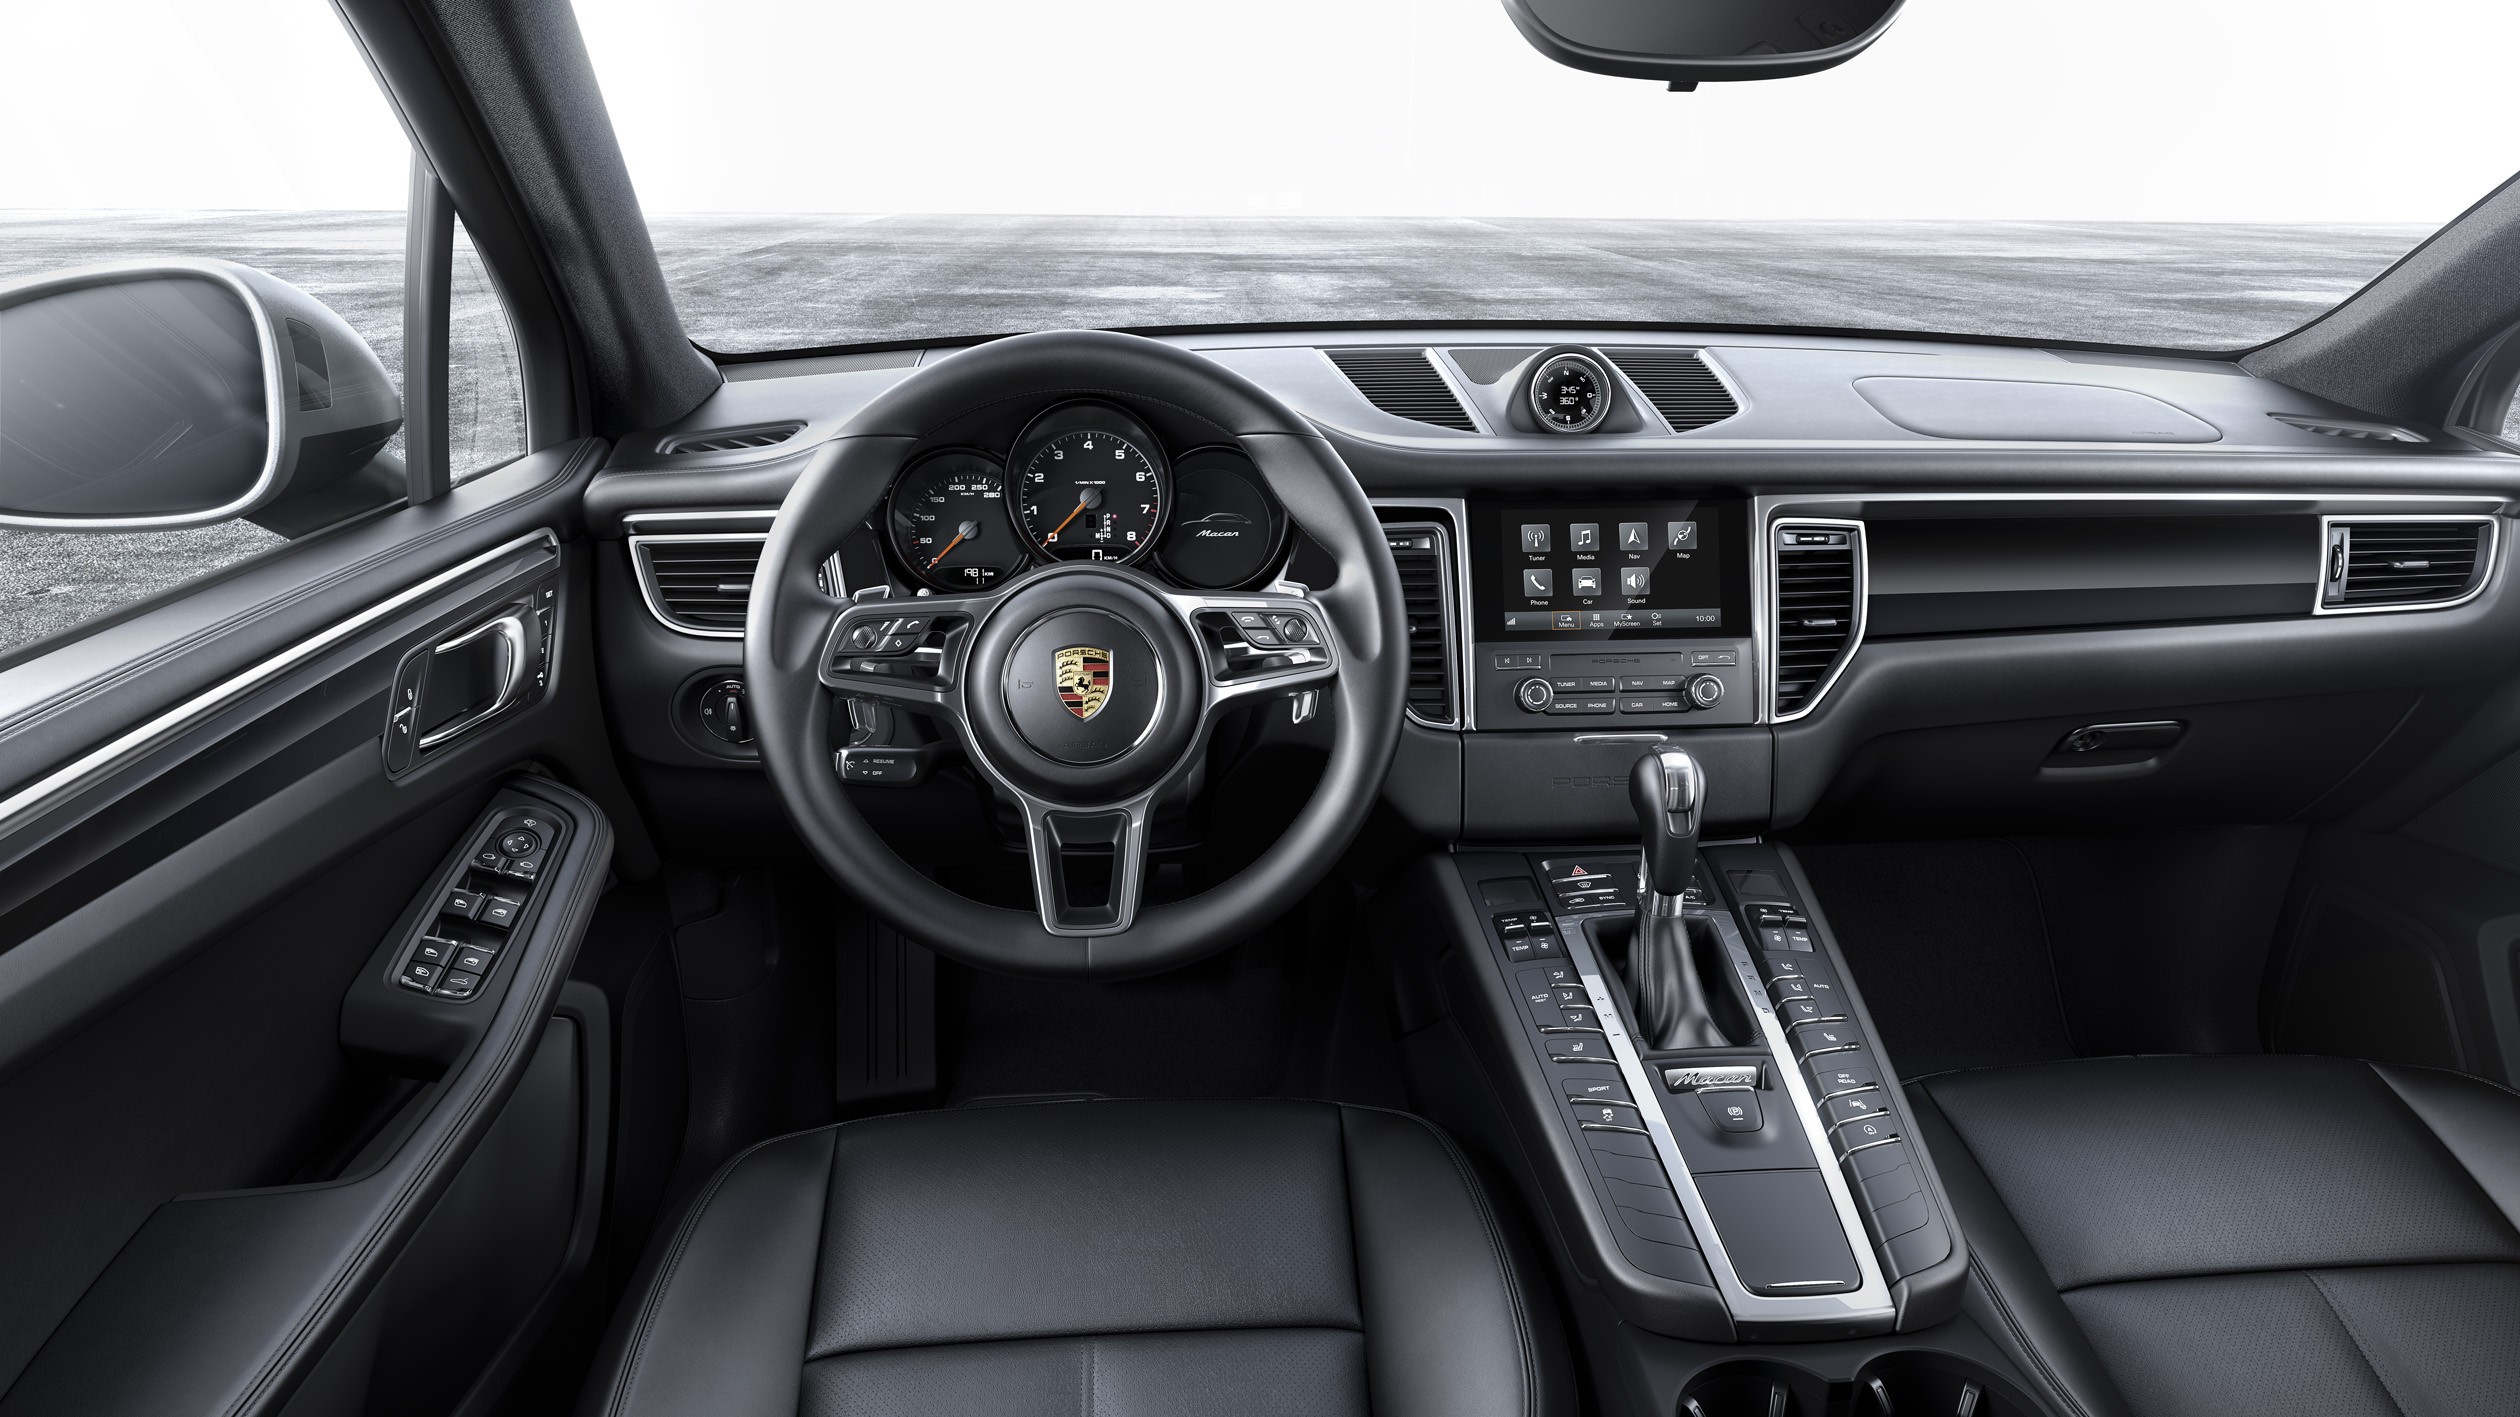 Porsche Macan interiors